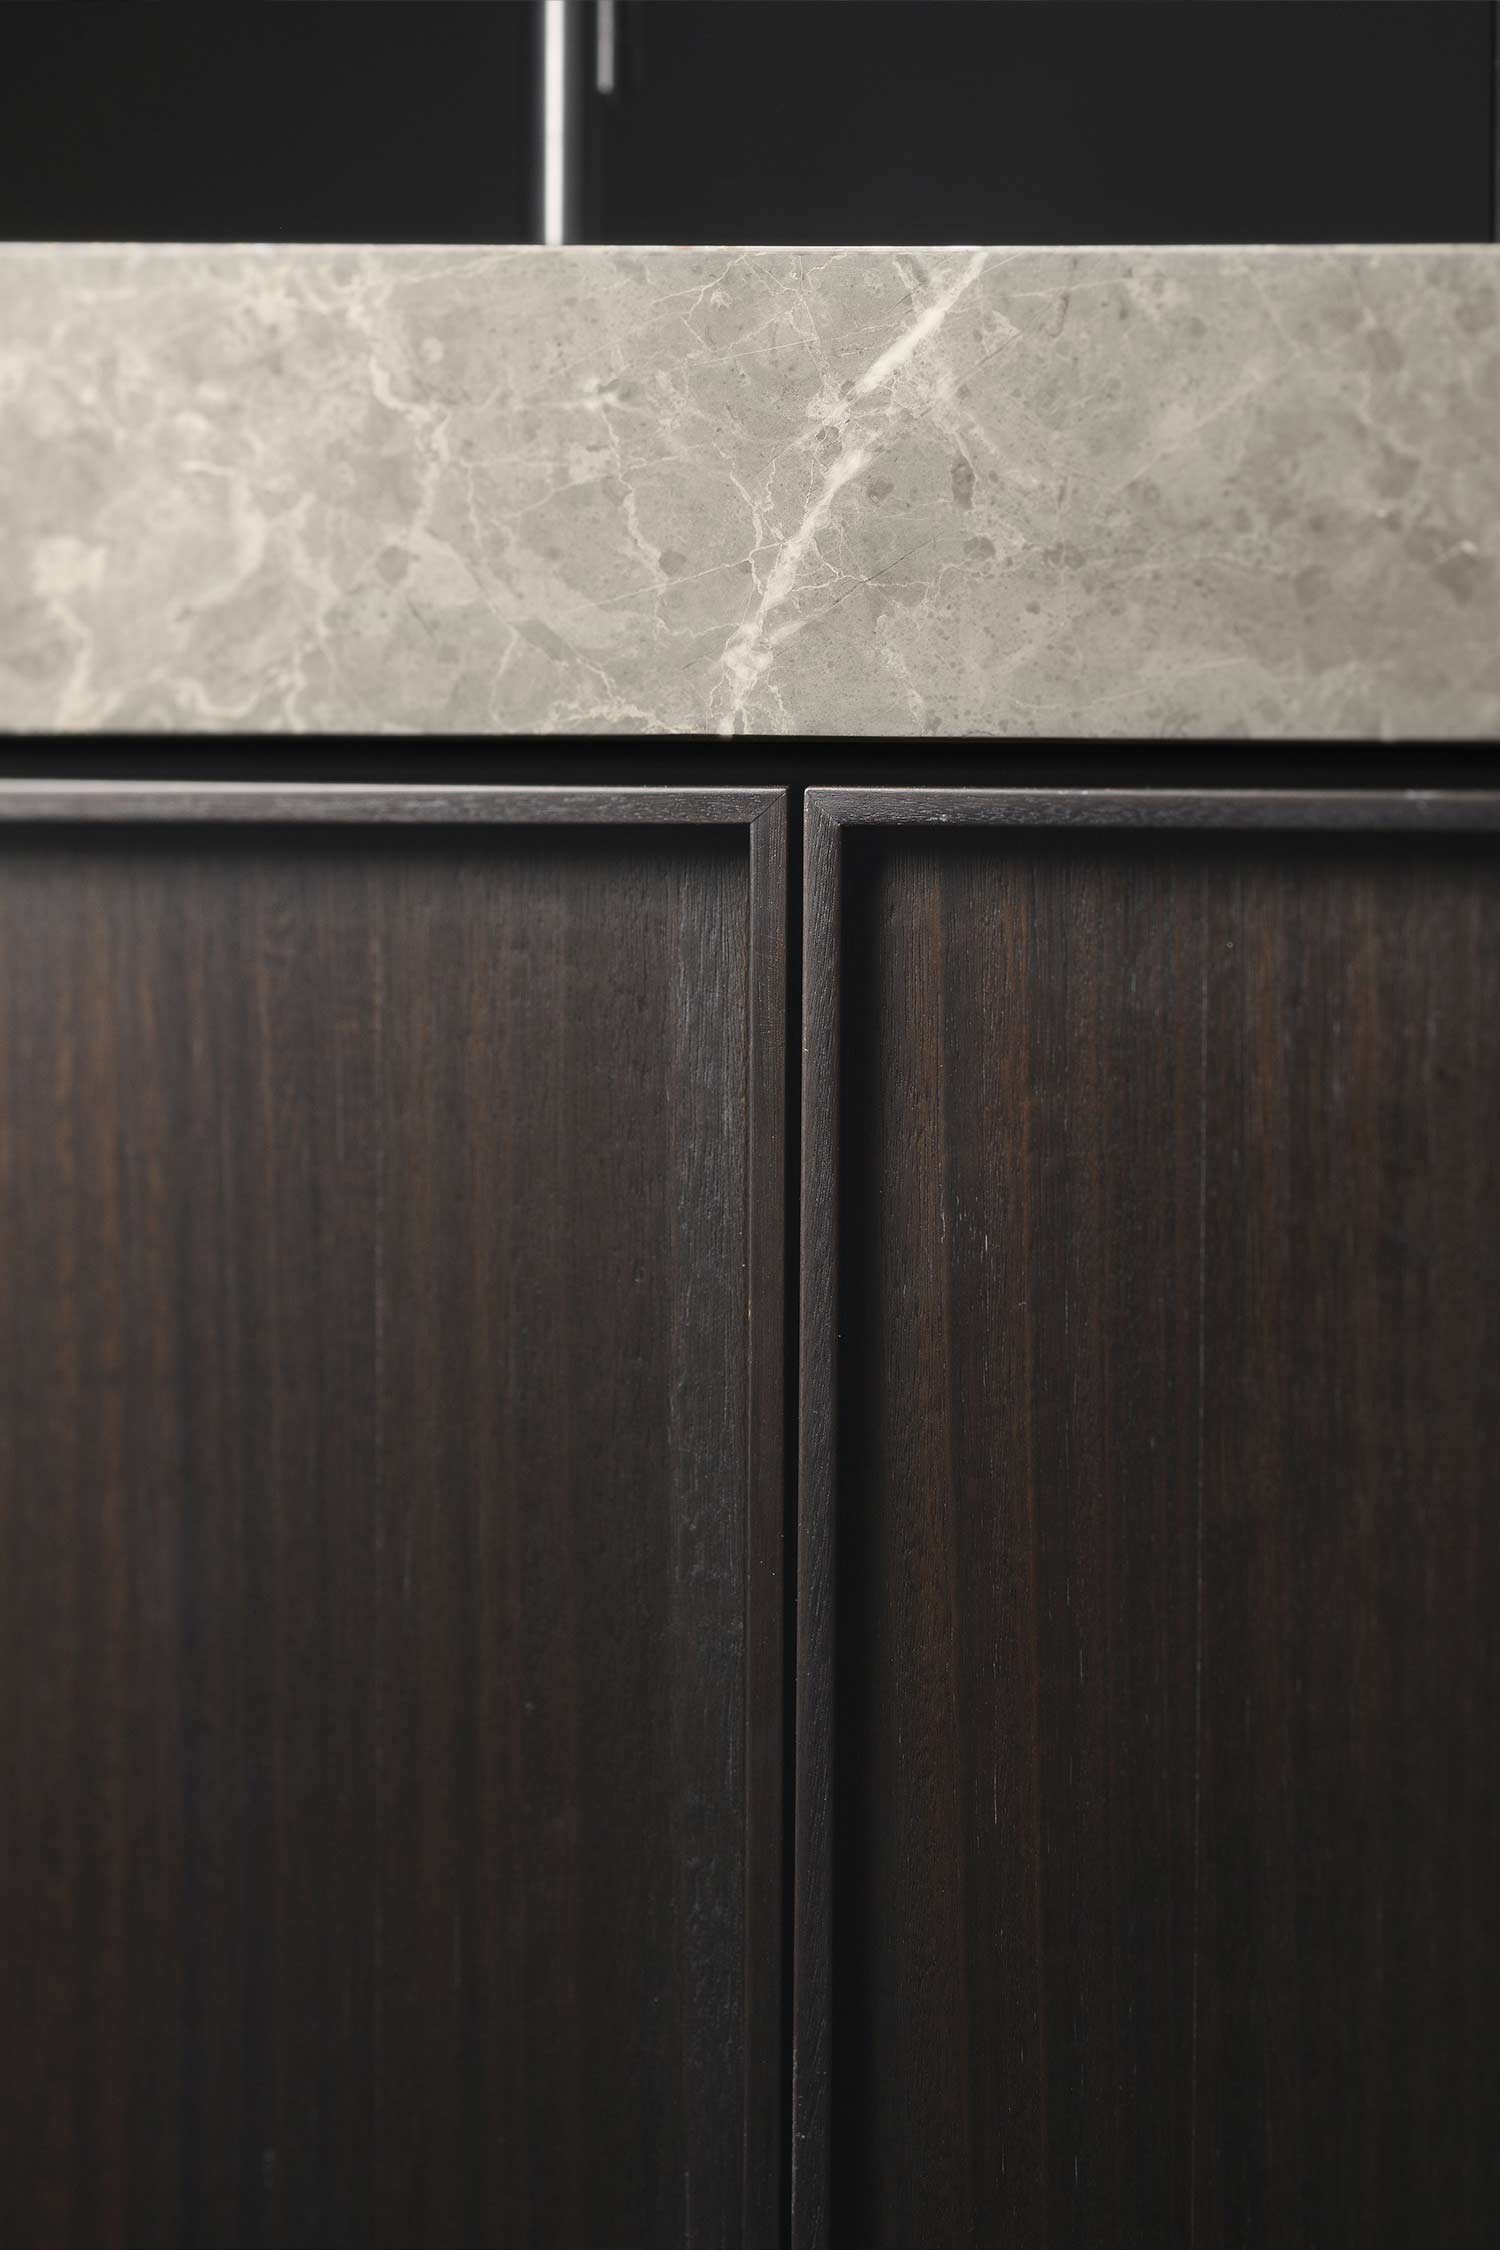 Luxury kitchen tray door finished in Smoked Eucalyptus wood veneer.